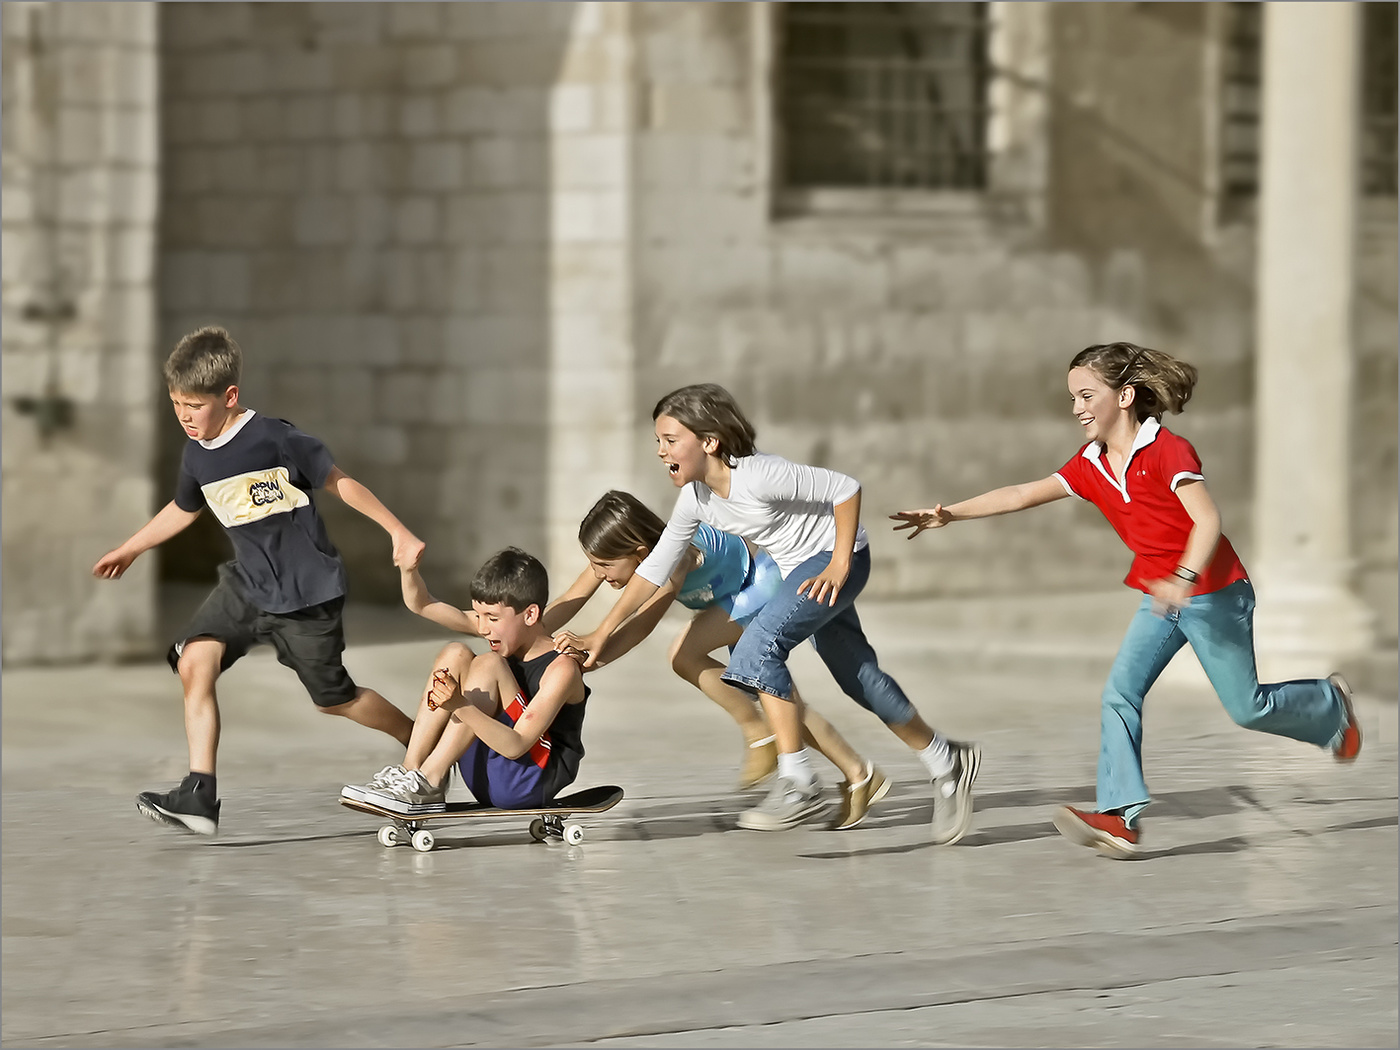 Kids playing in Street